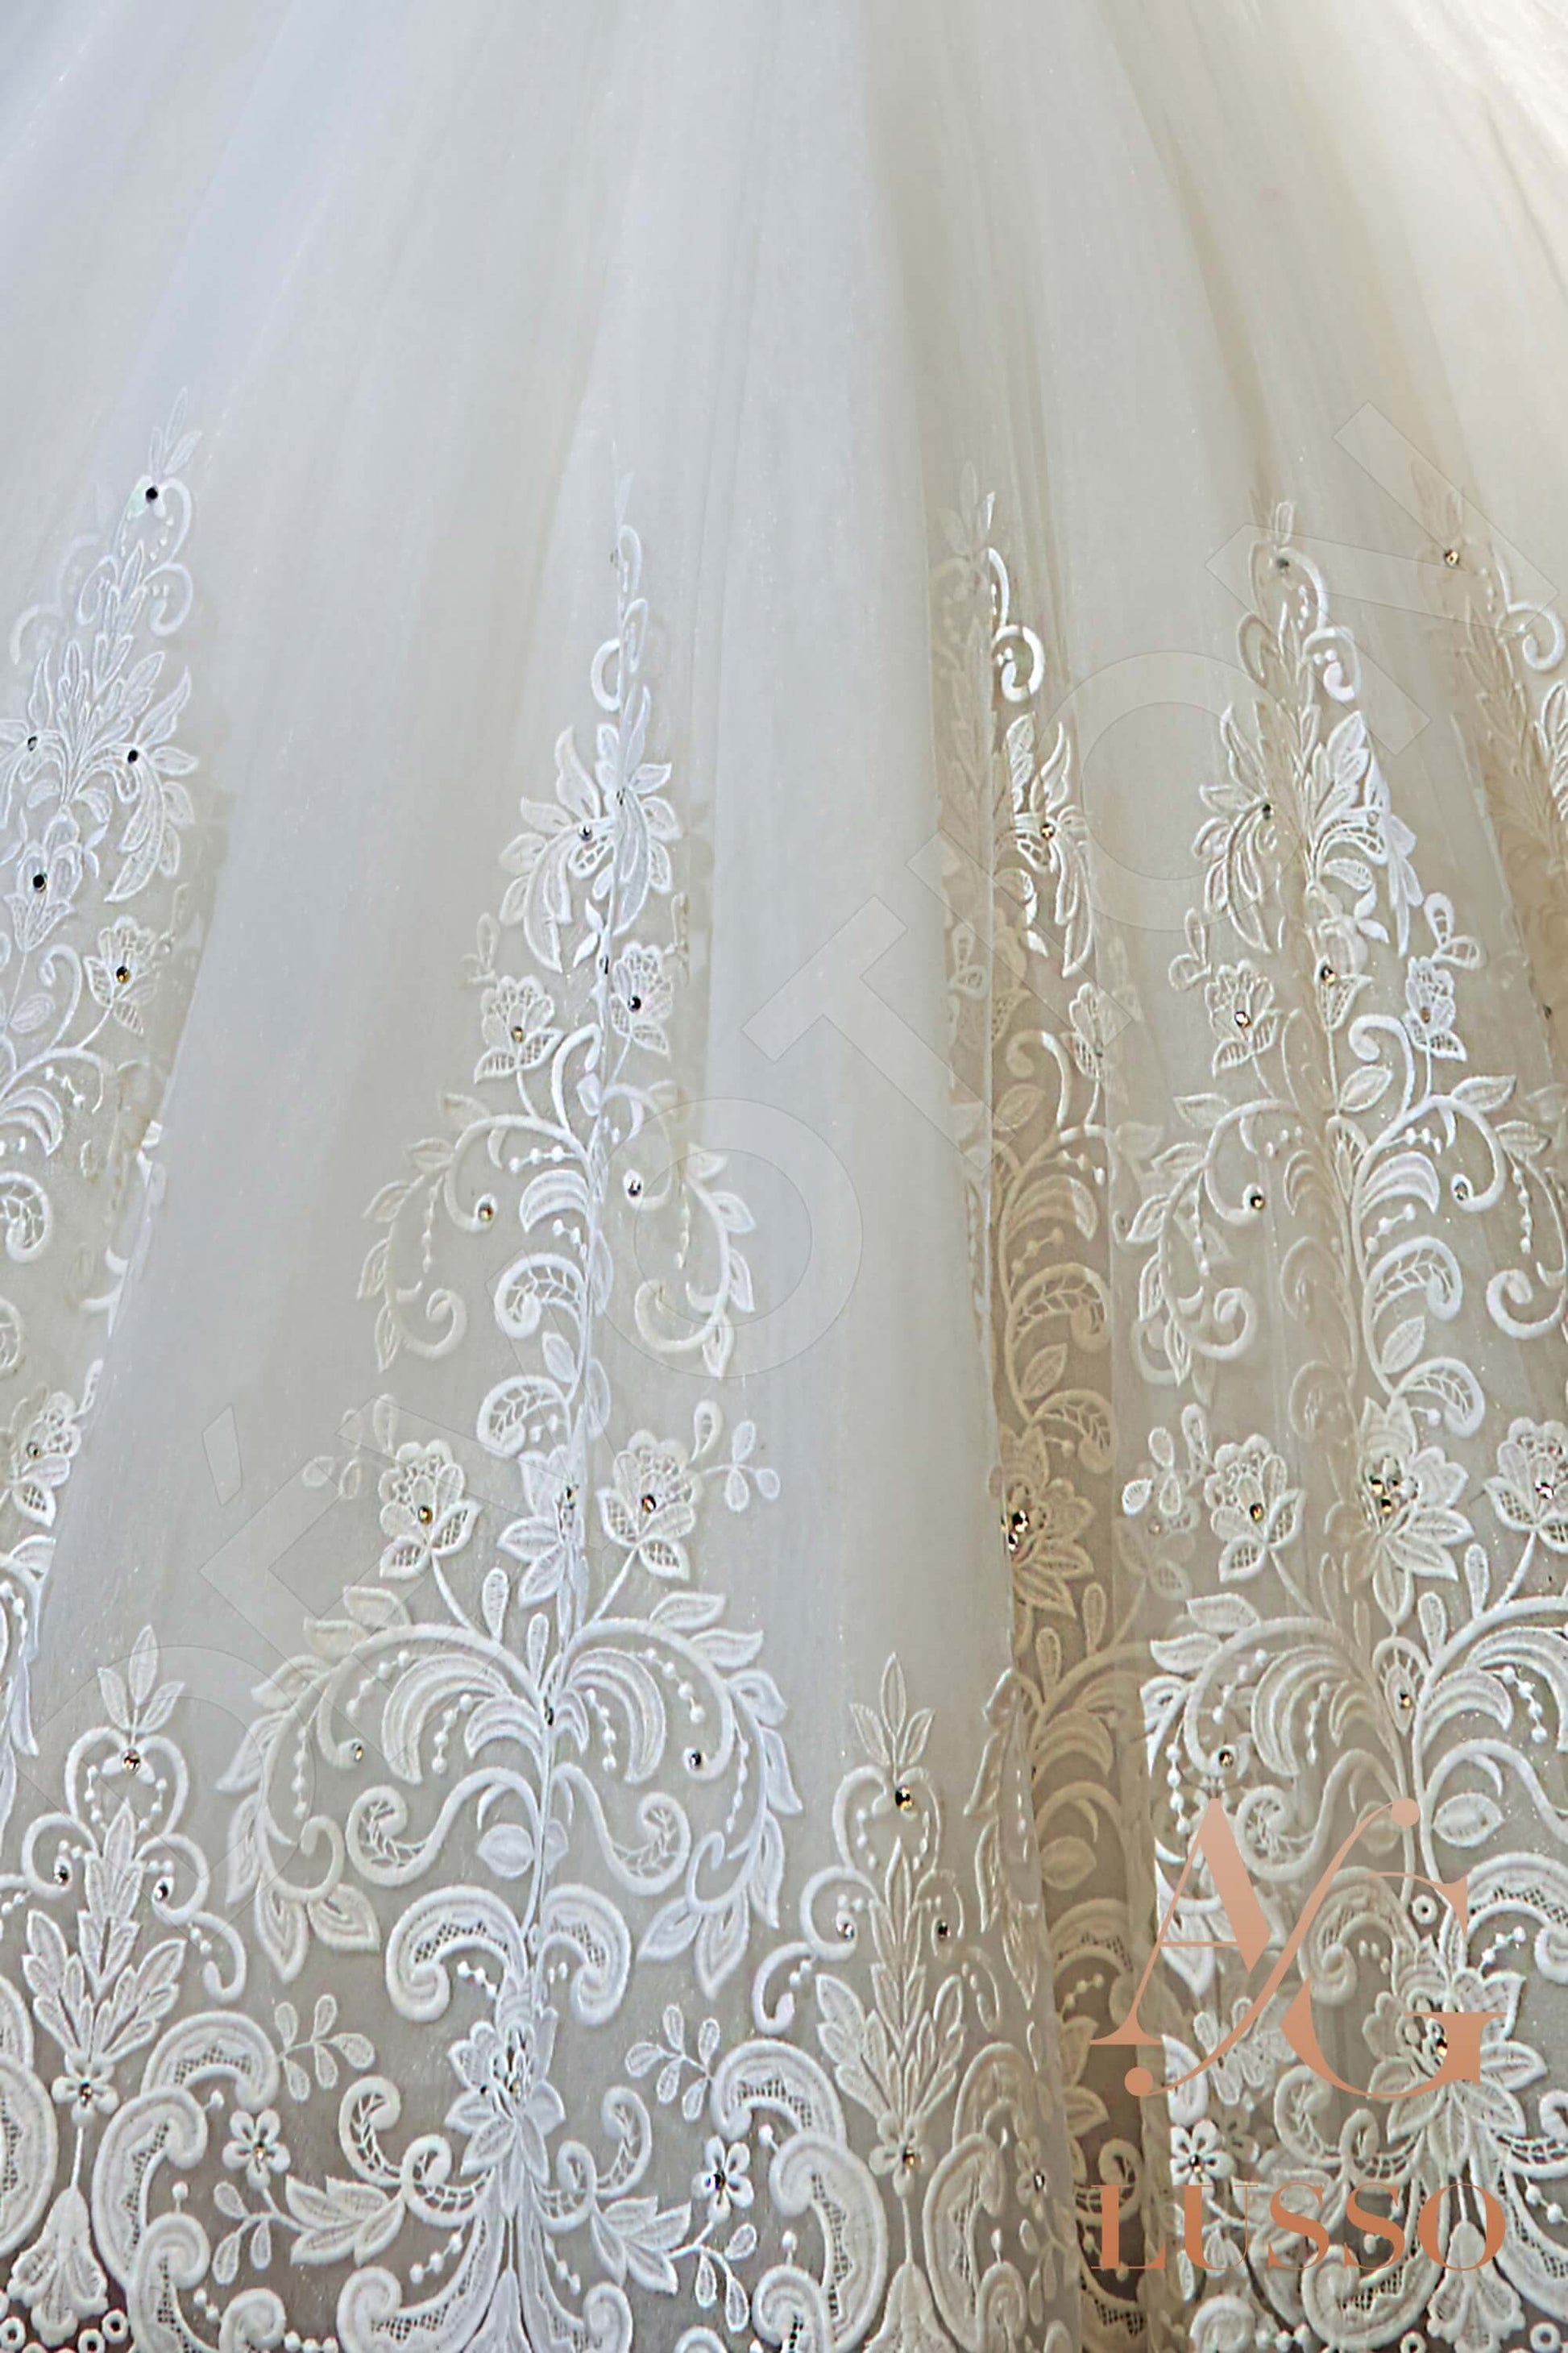 Jeralda Princess/Ball Gown Sweetheart White Wedding dress